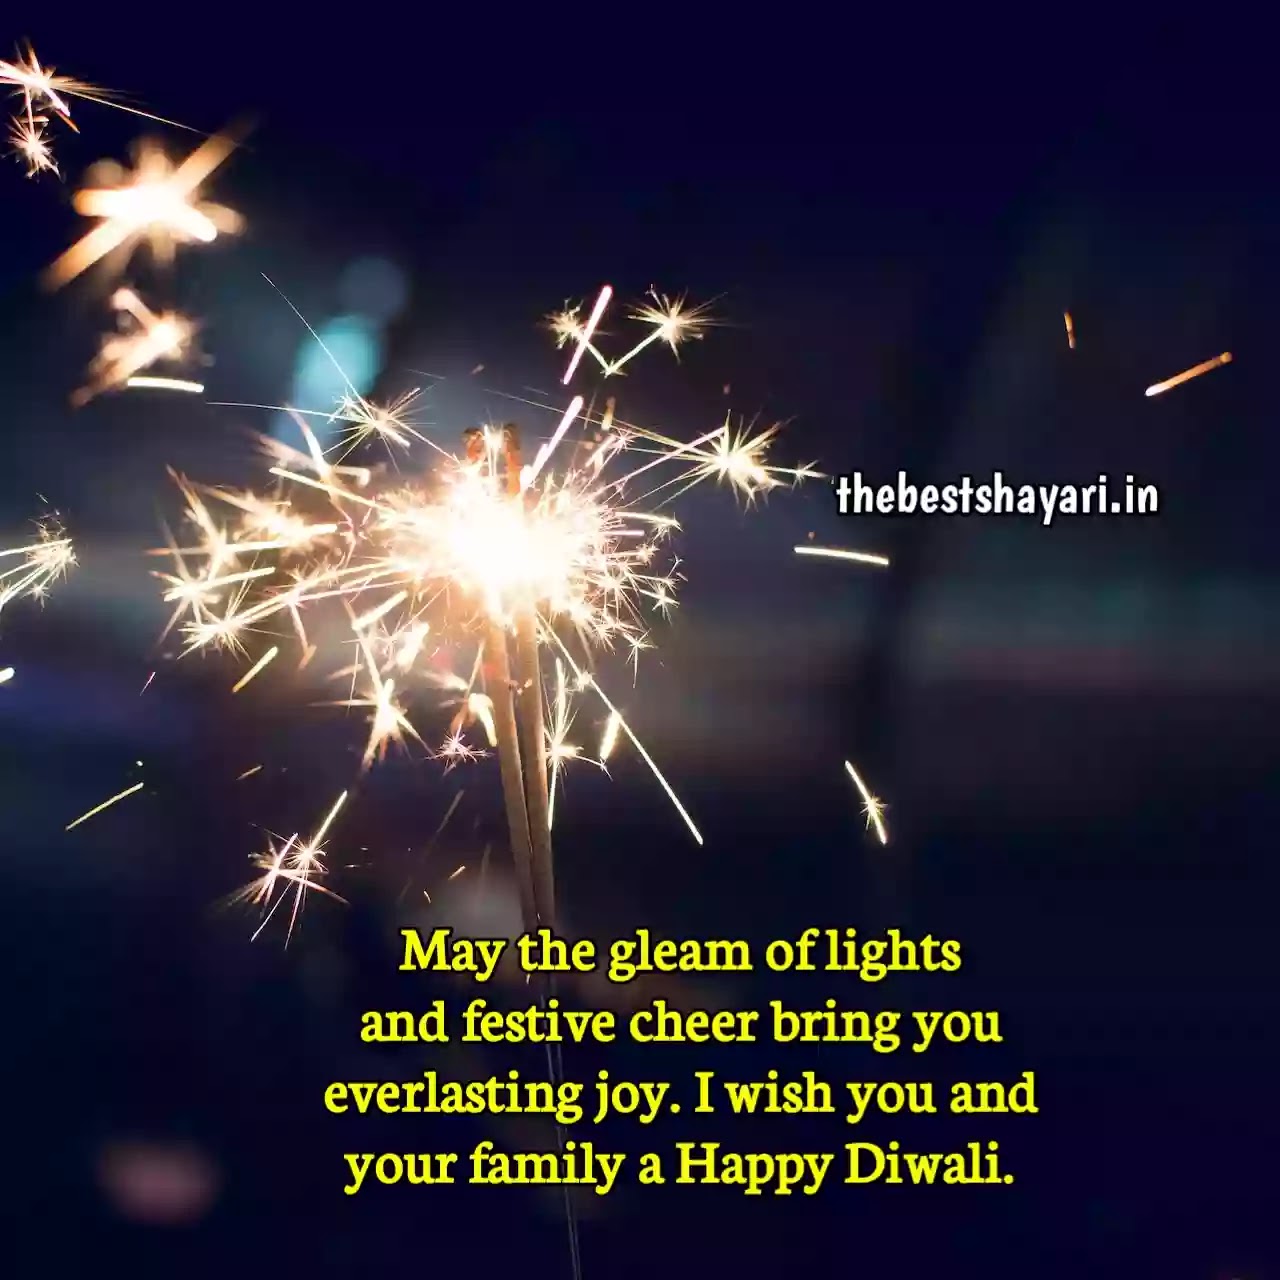 Diwali wishes pic